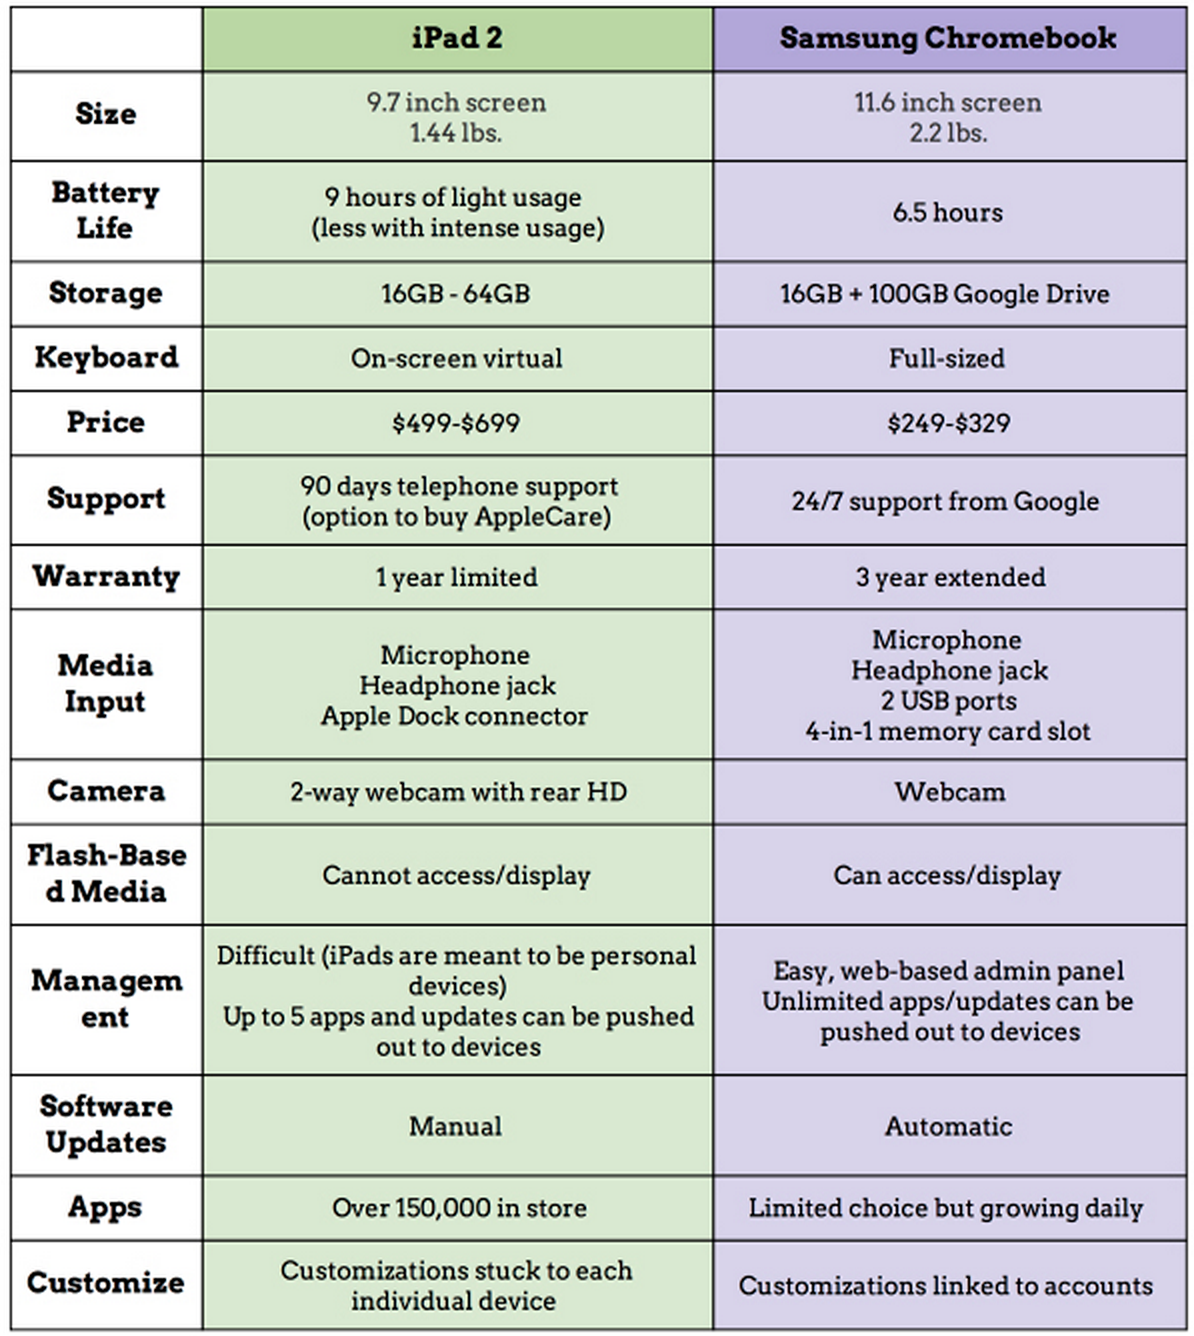 Chromebook Comparison Chart